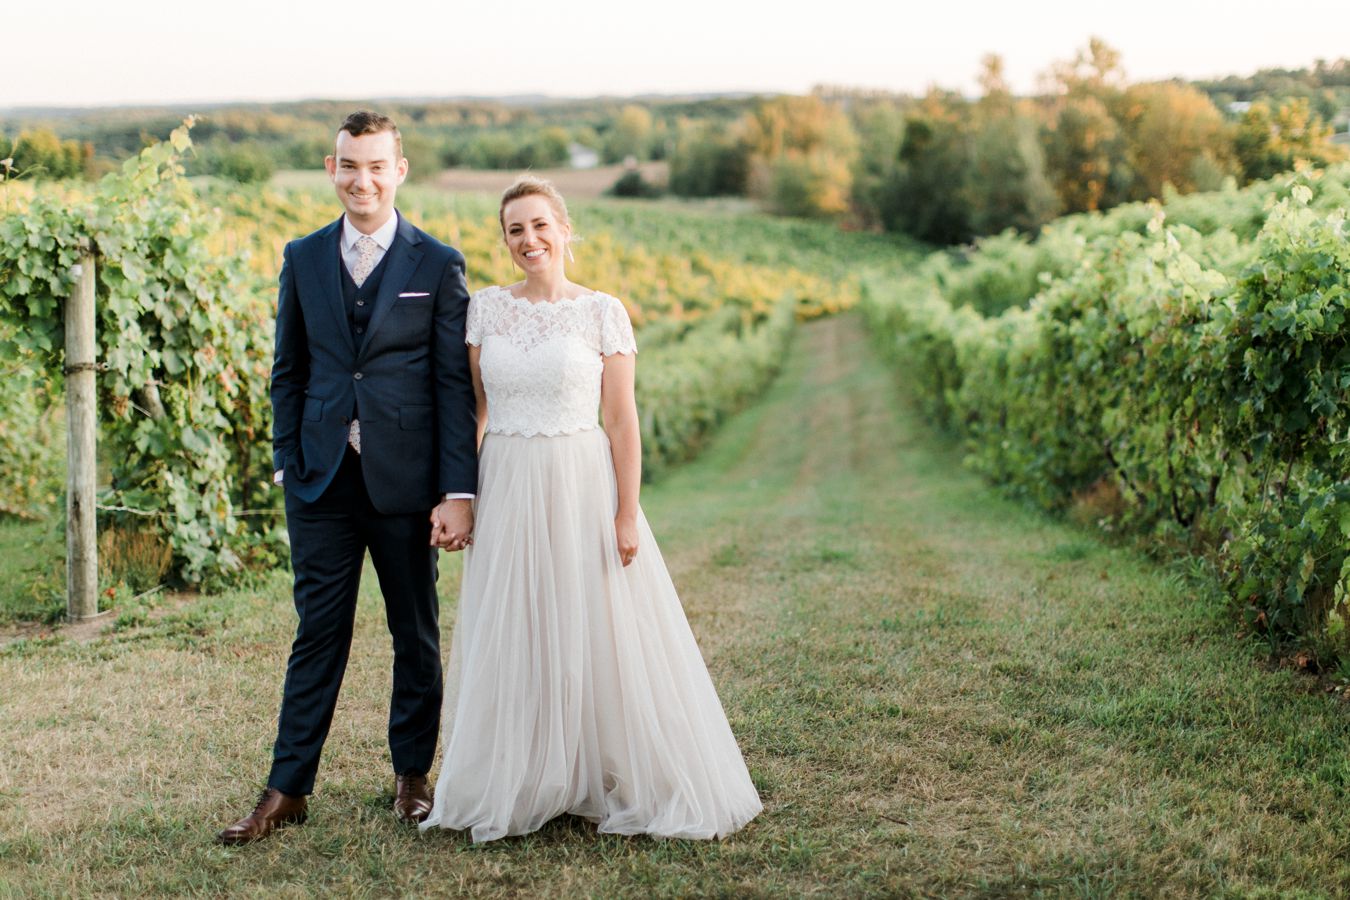 Northern Michigan Wedding Photography | Cory Weber Photography 